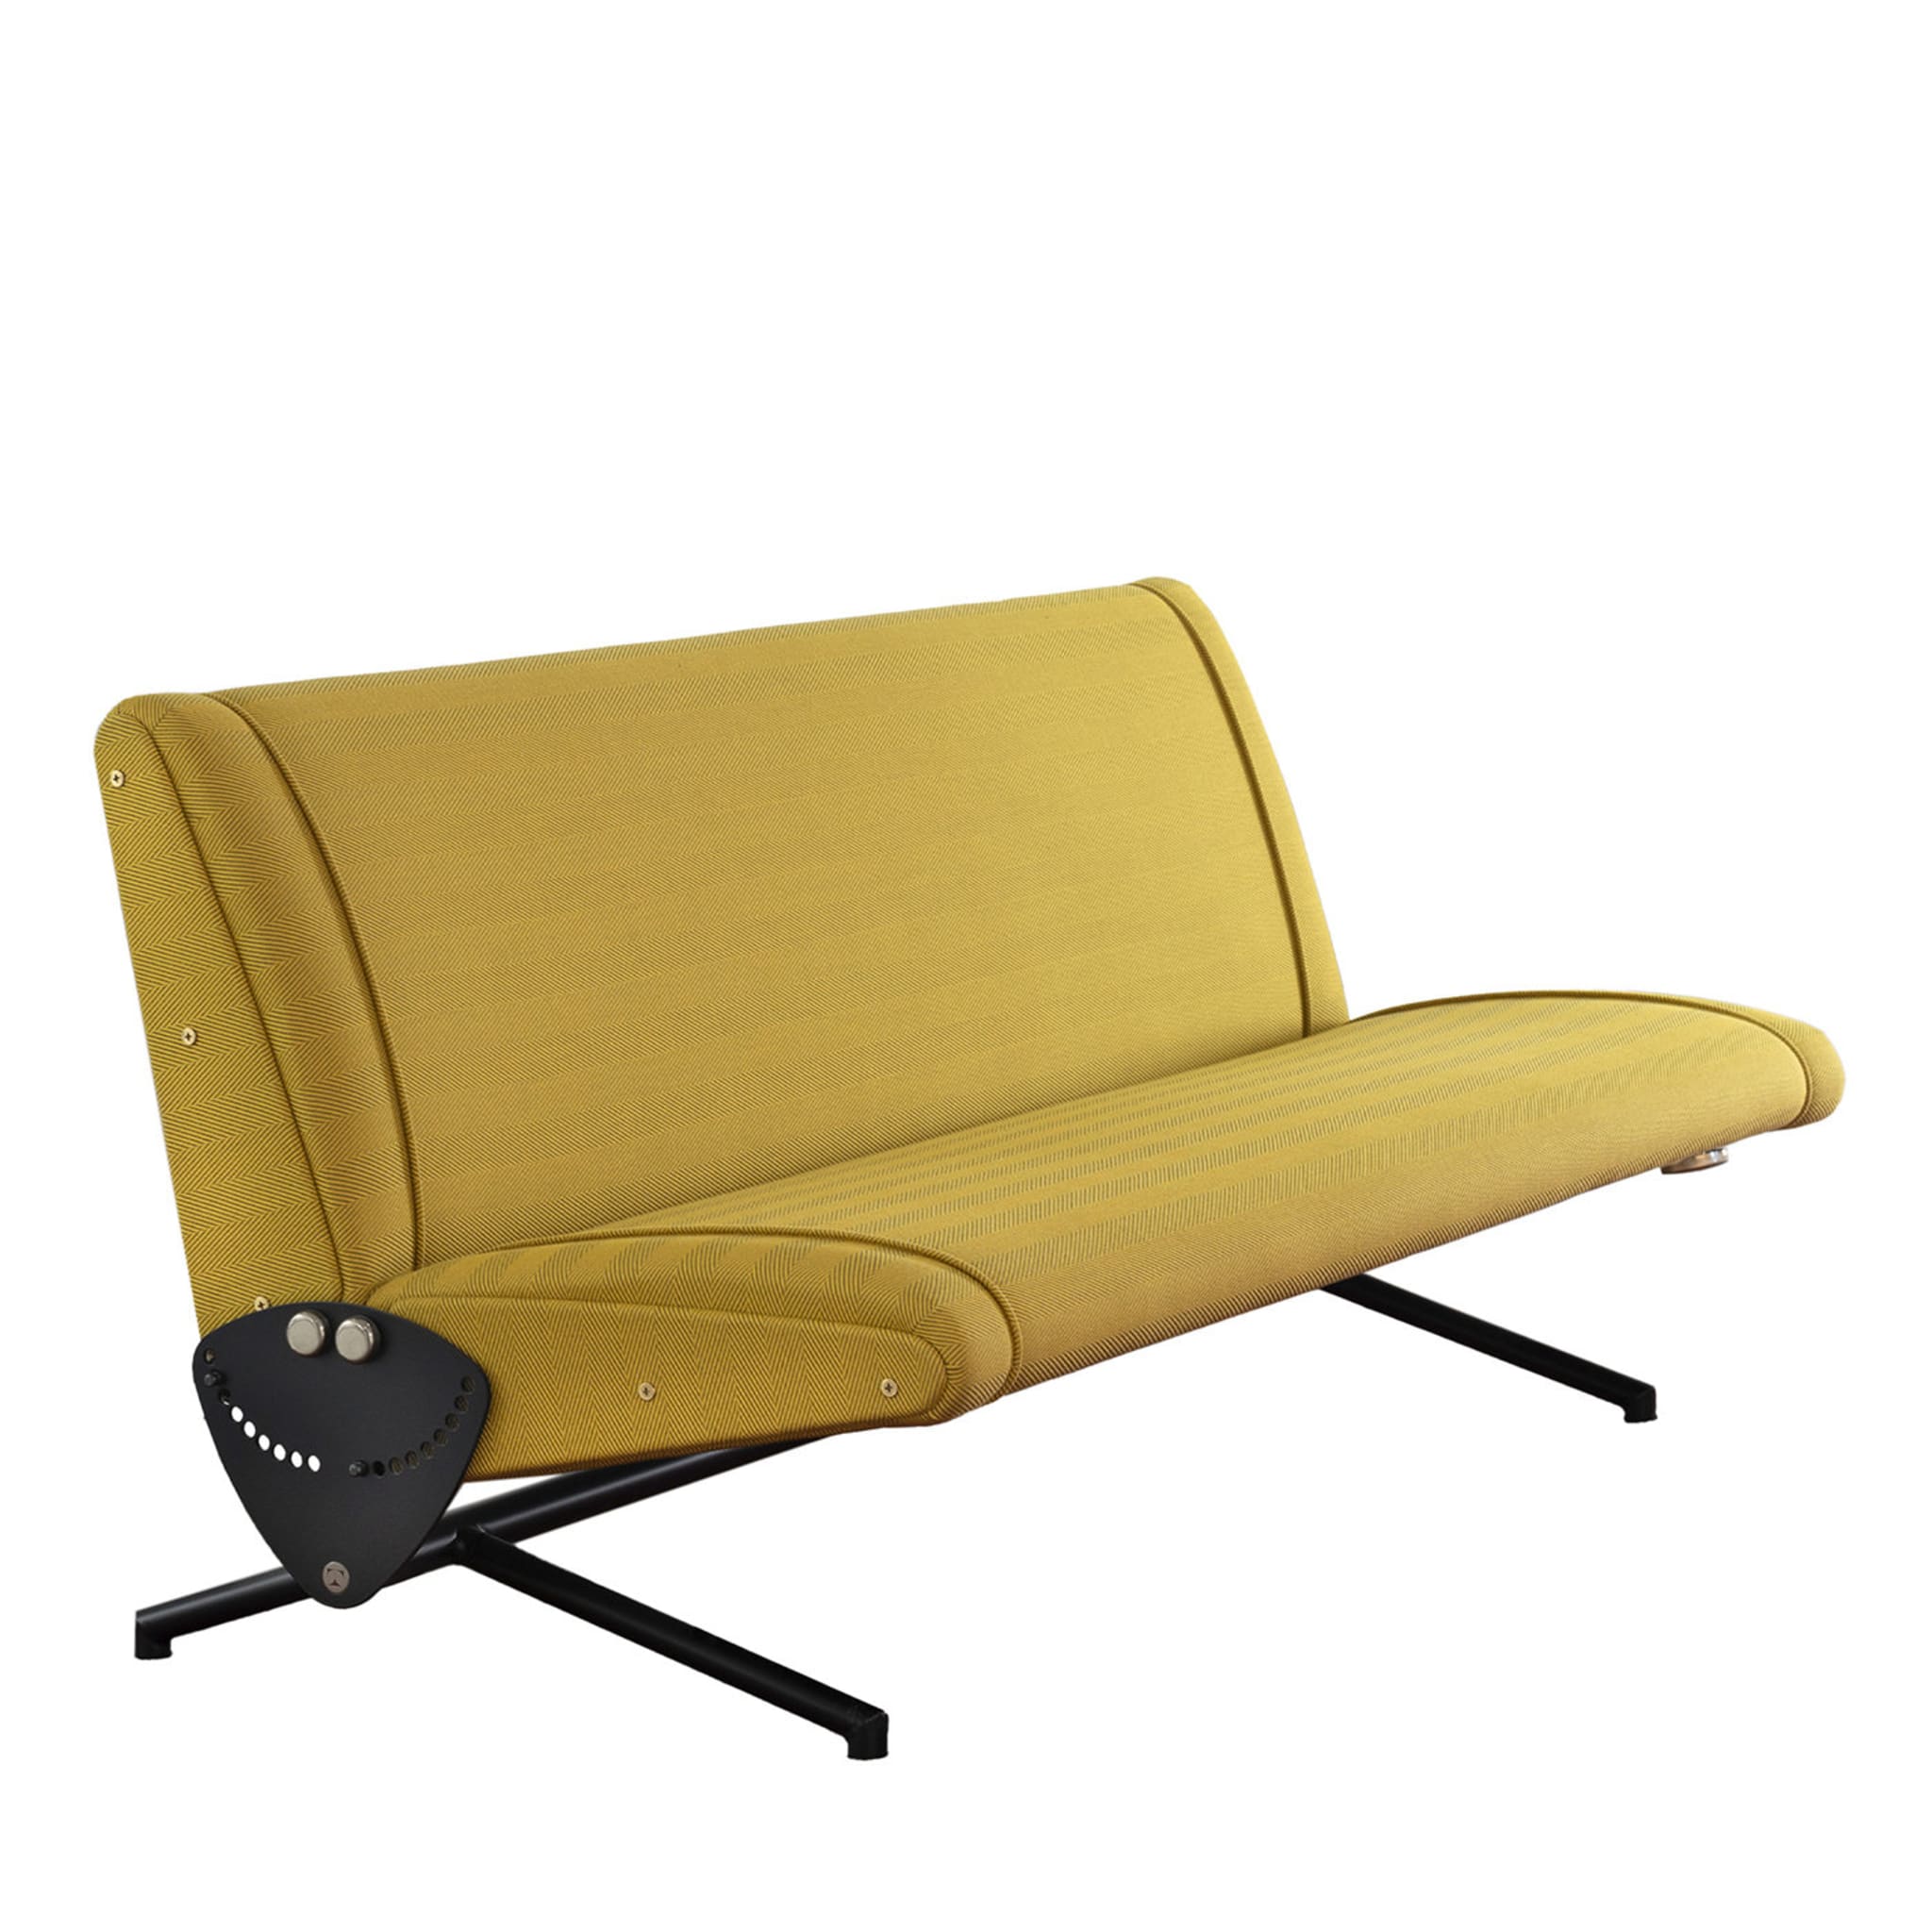 D70 Yellow Sofa by Osvaldo Borsani - Main view